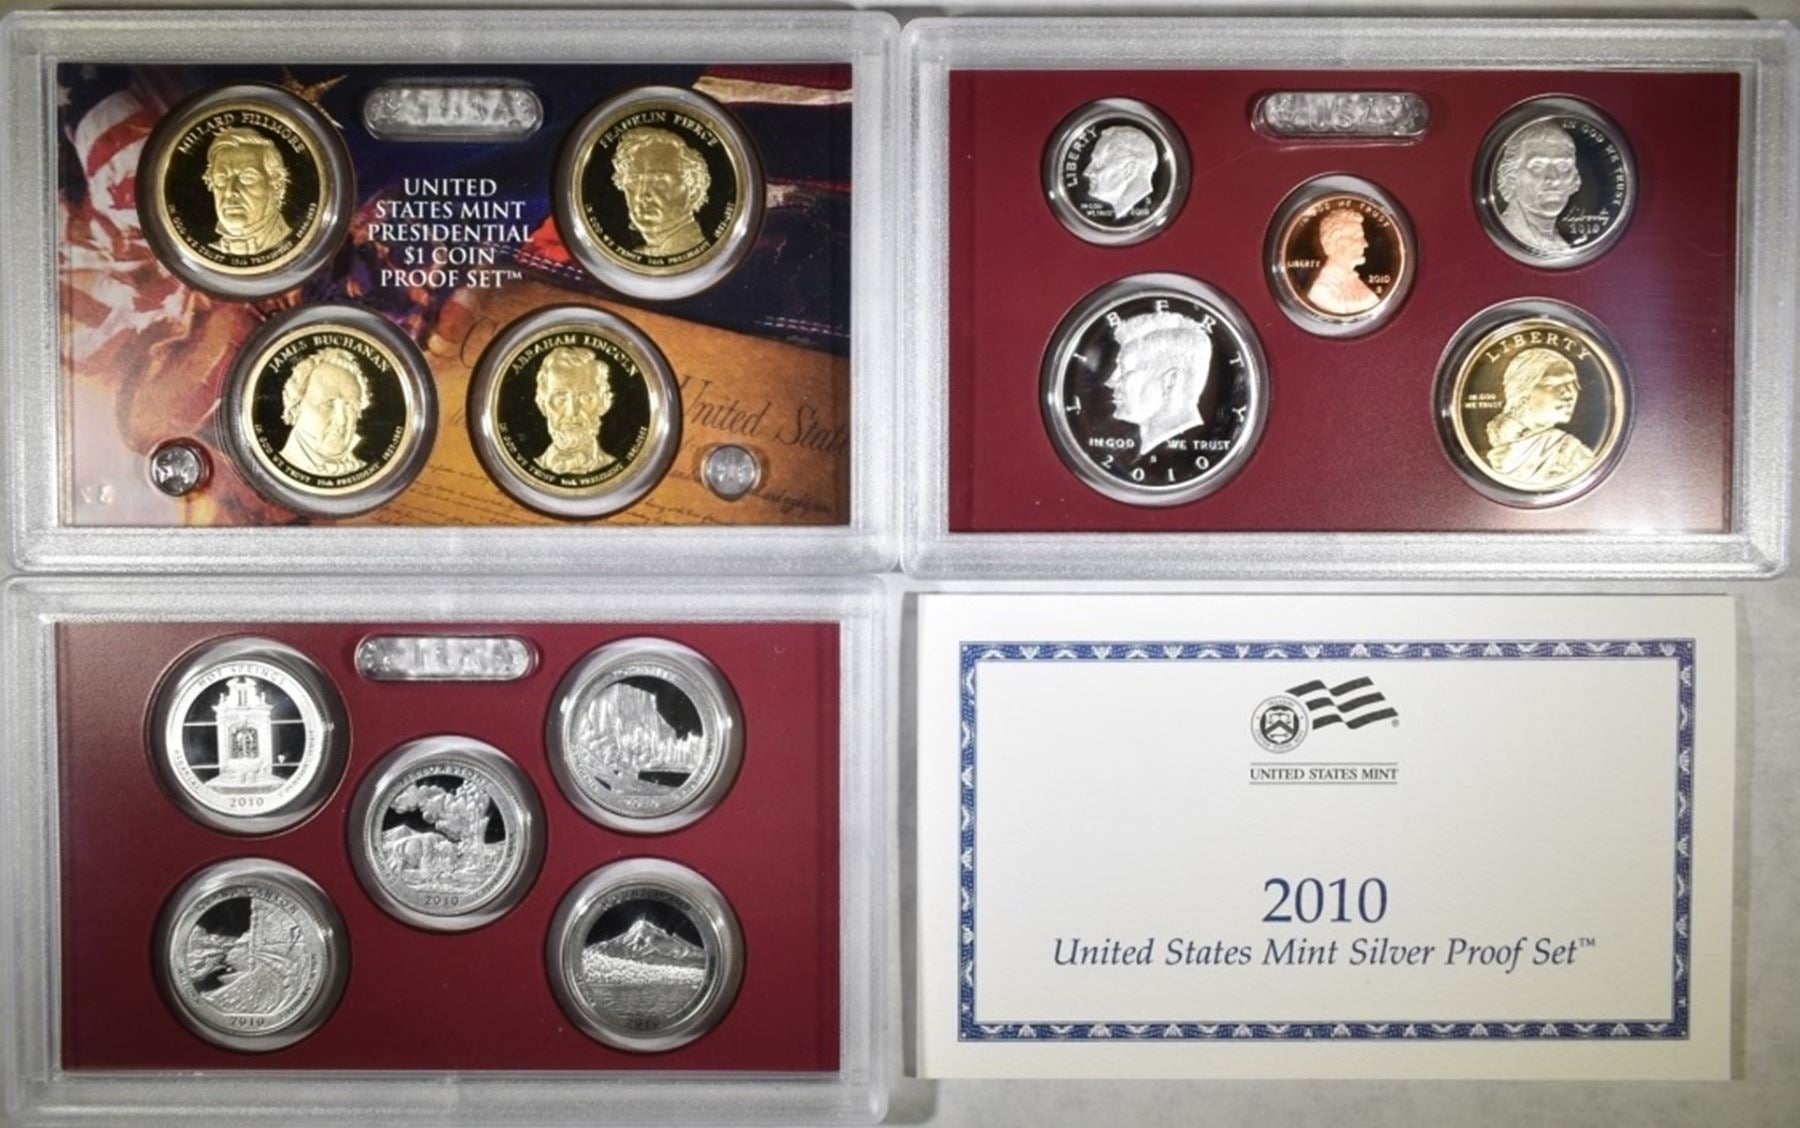 2010- United States Mint Silver Proof Set Captain’s Chest Bullion